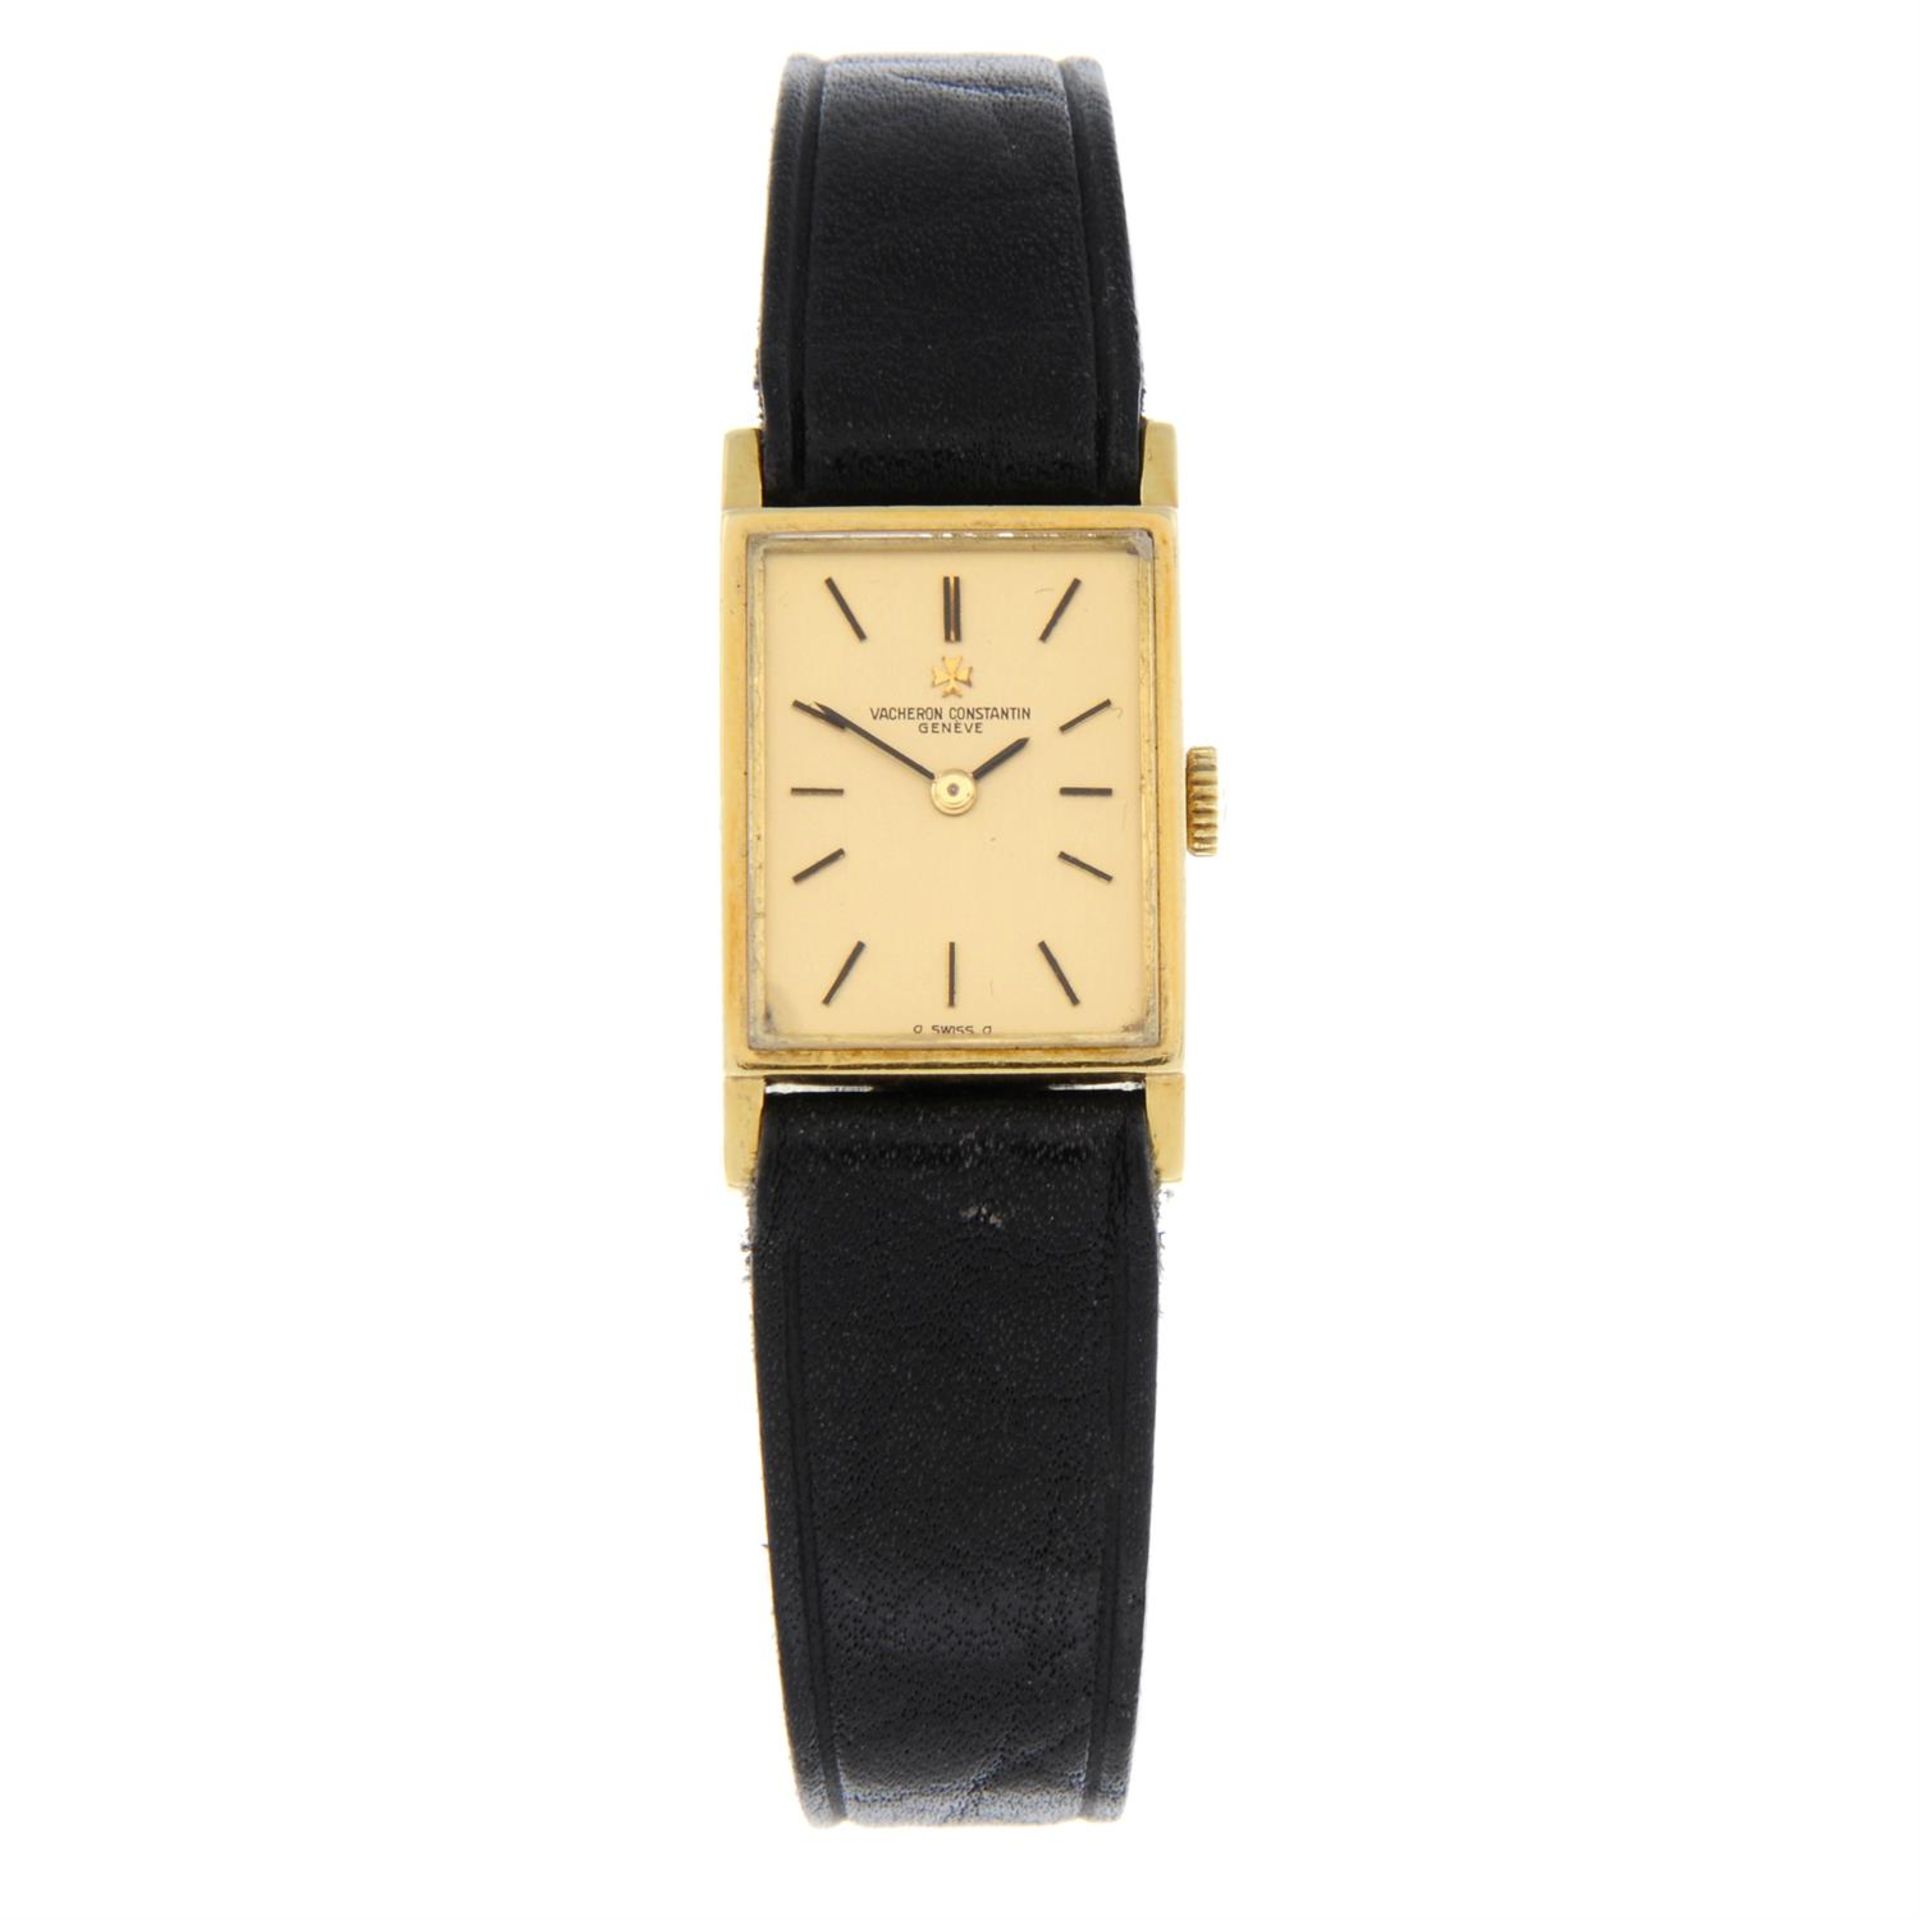 VACHERON CONSTANTIN - a yellow metal wrist watch, 16x20mm